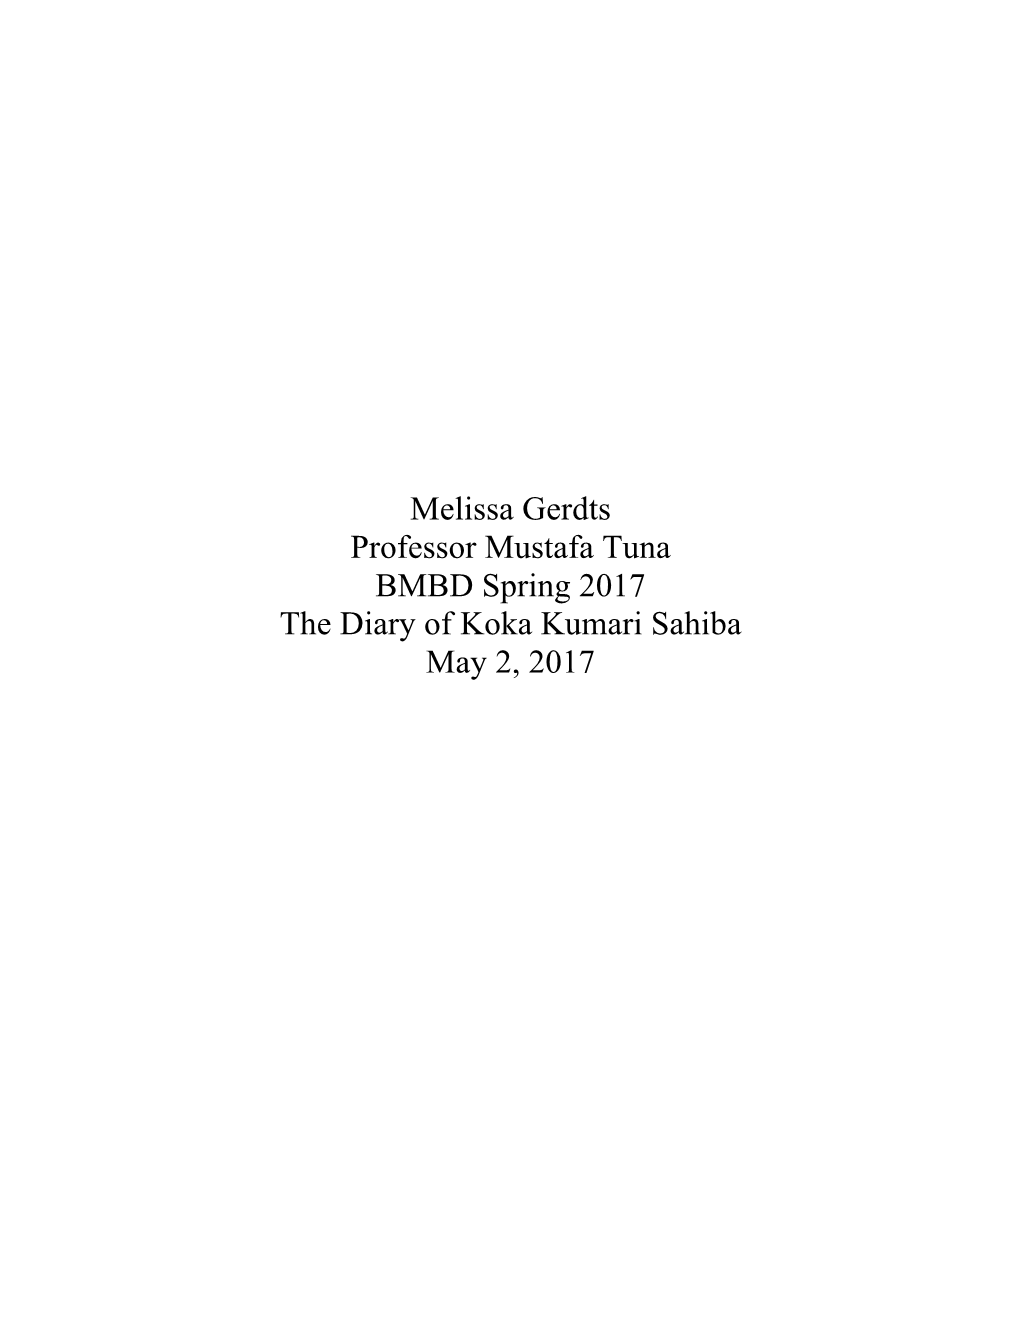 Melissa Gerdts Professor Mustafa Tuna BMBD Spring 2017 the Diary of Koka Kumari Sahiba May 2, 2017 Introduction